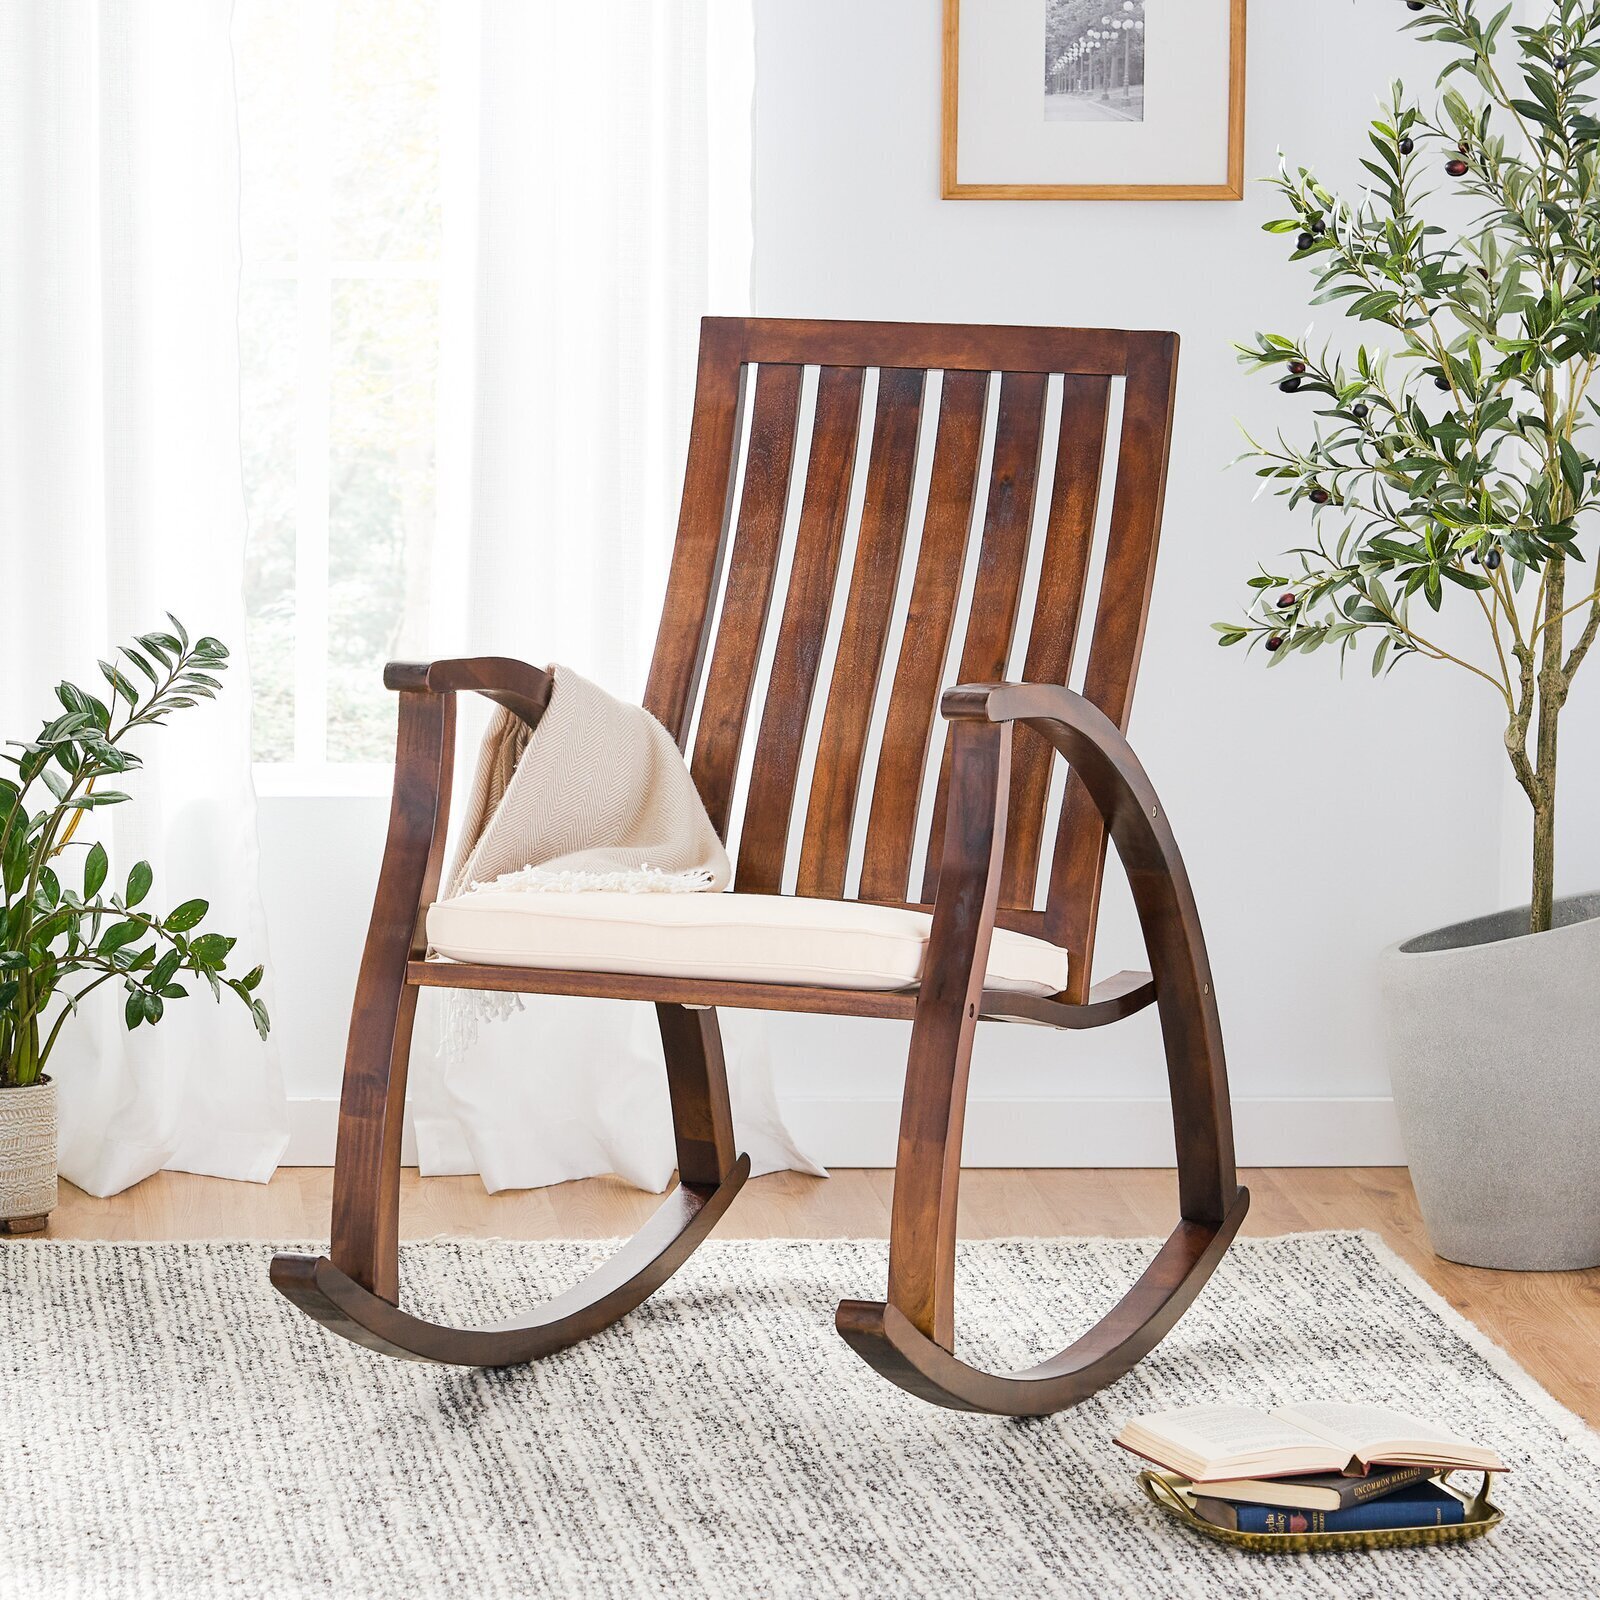 Mahogany wooden nursery rocking chair